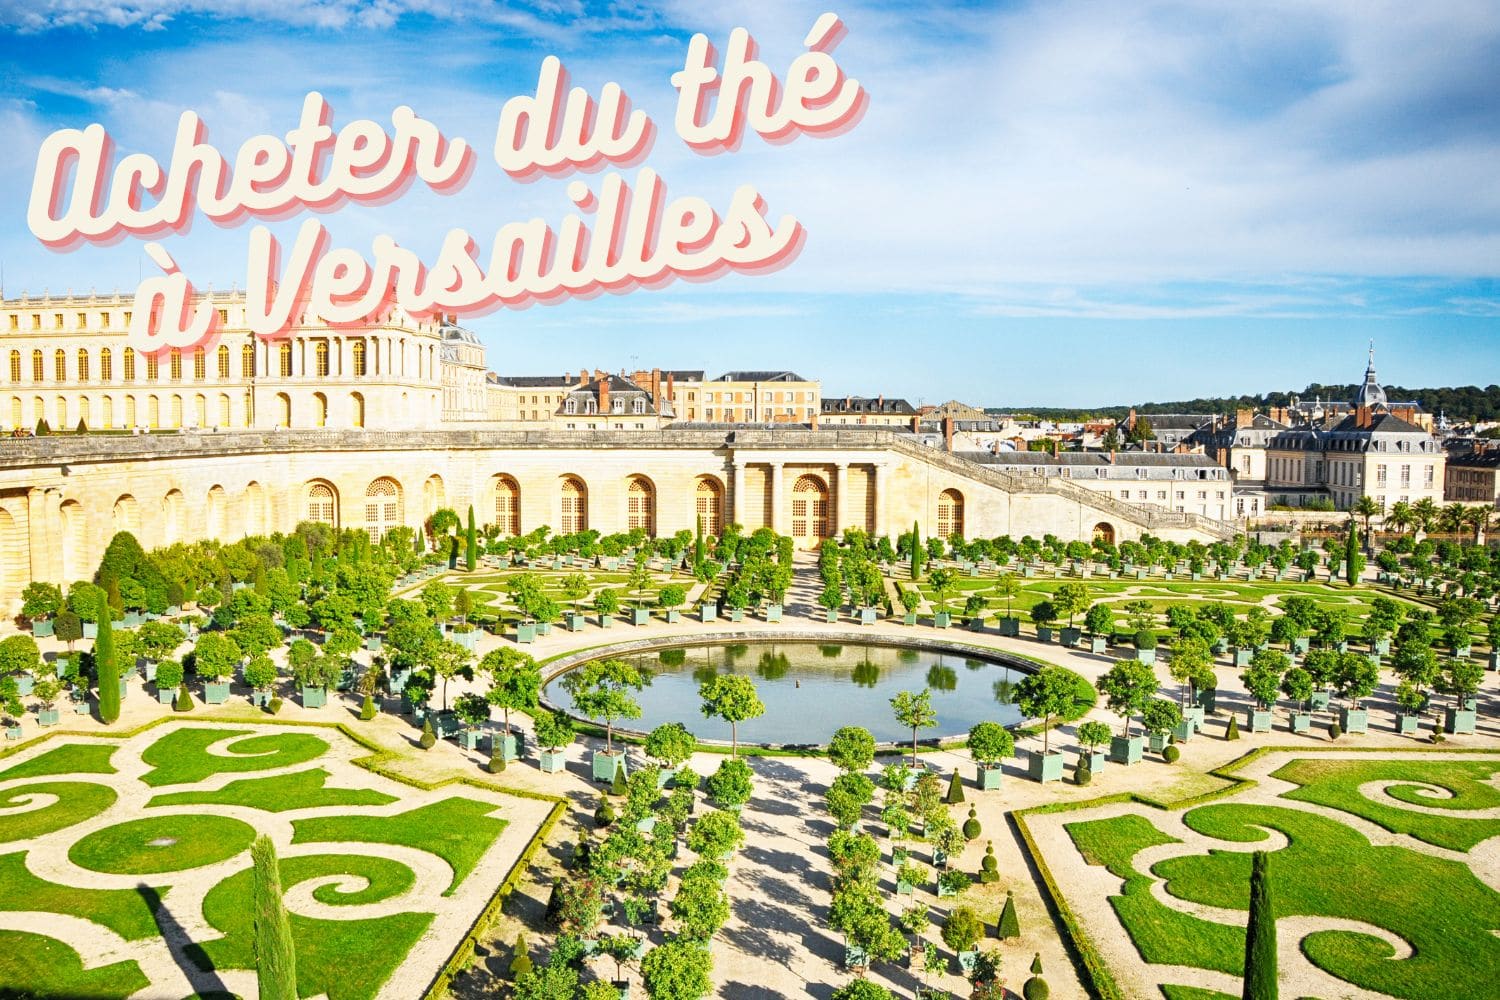 Acheter du thé à Versailles